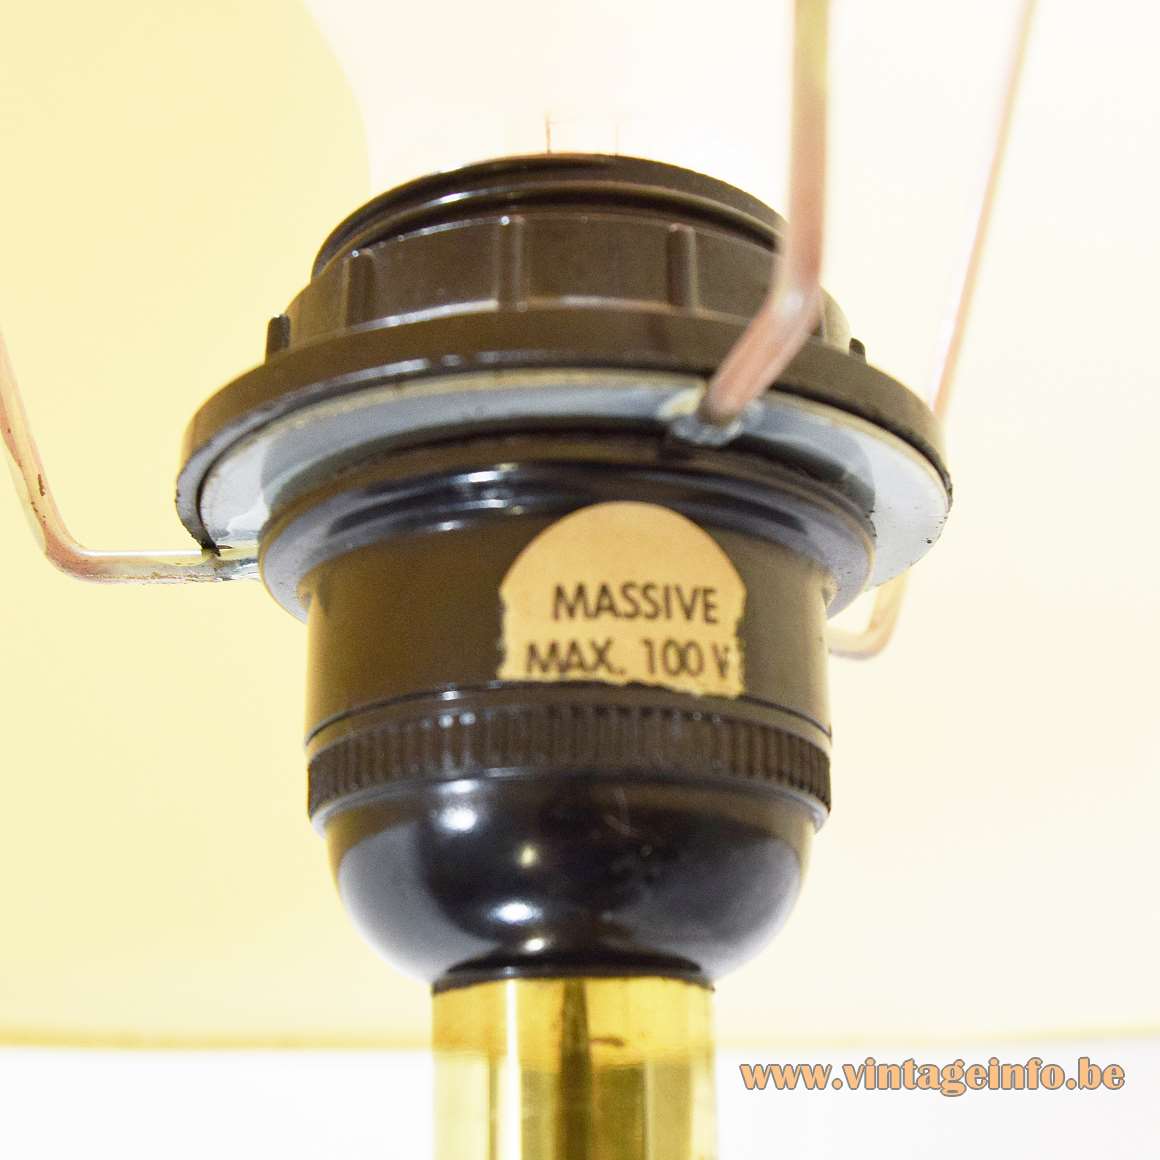 1970s Massive Belgium Brass Table Lamp - Massive Label Max 100 Watt